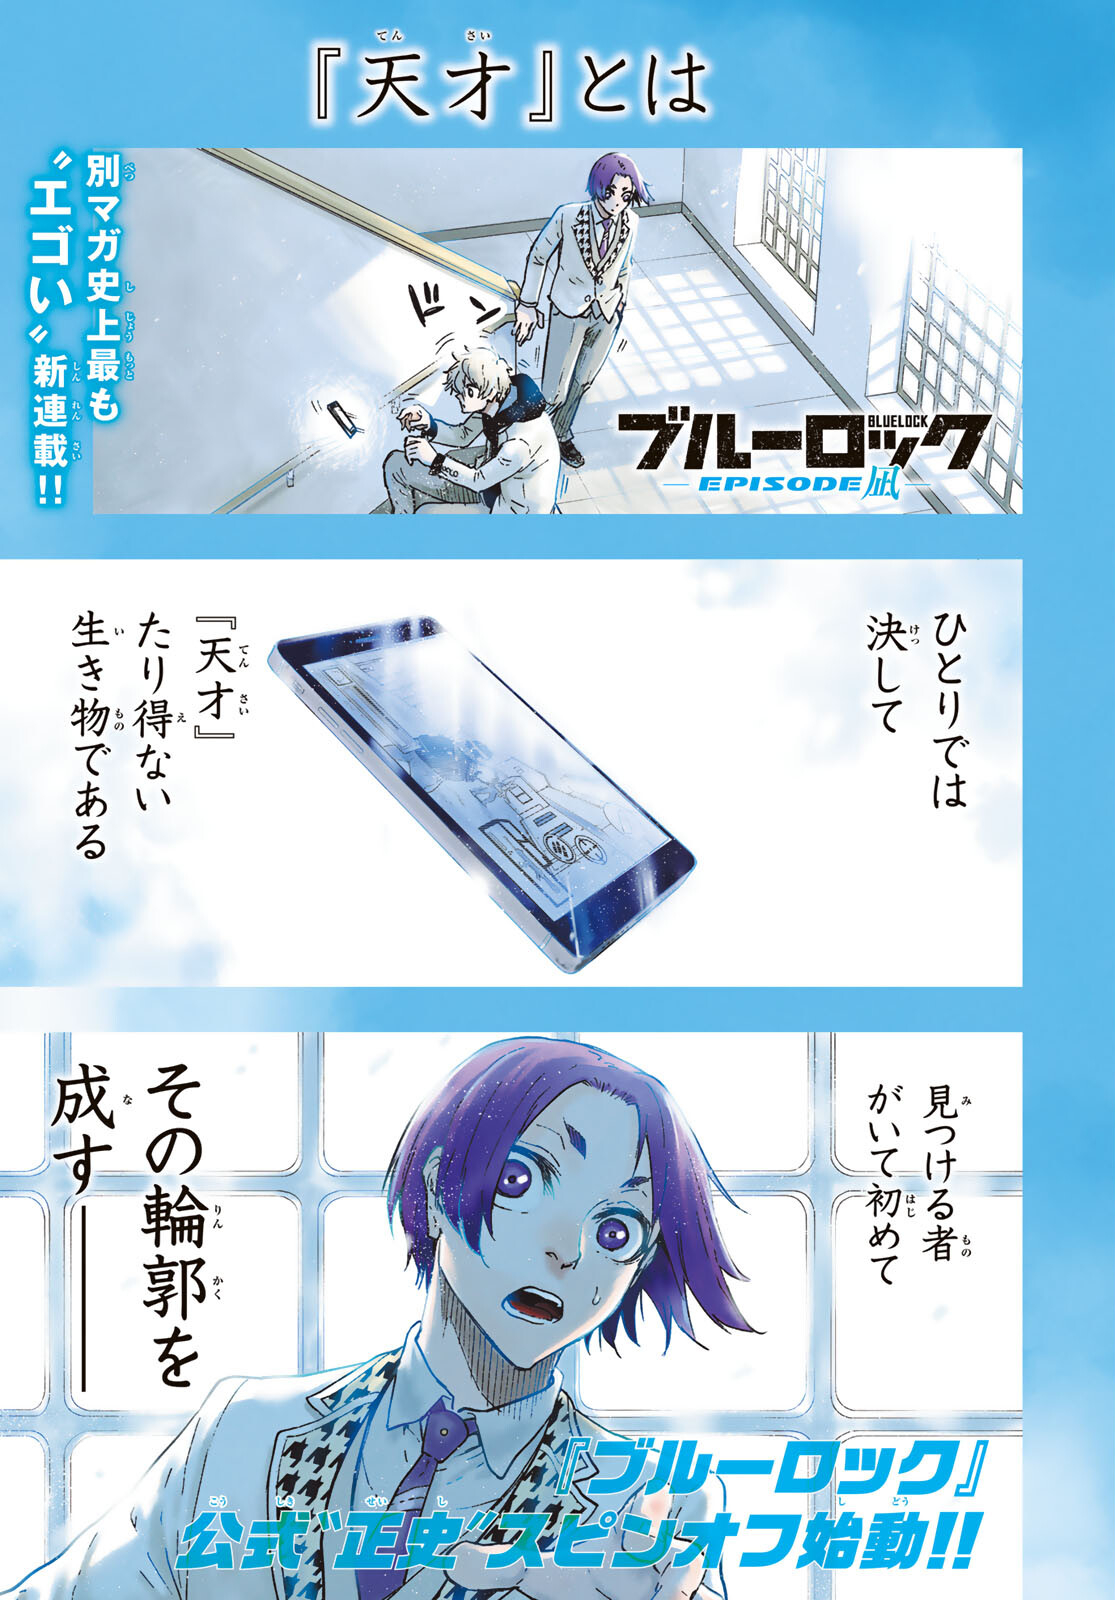 Manga Mogura RE on X: Blue Lock spin-off manga, about Seishiro Nagi, Blue  Lock - Episode Nagi vol 1 by Kouta Sannomiya (Tesla Note, Seishun  Soukanzu), Kaneshiro Muneyuki  / X